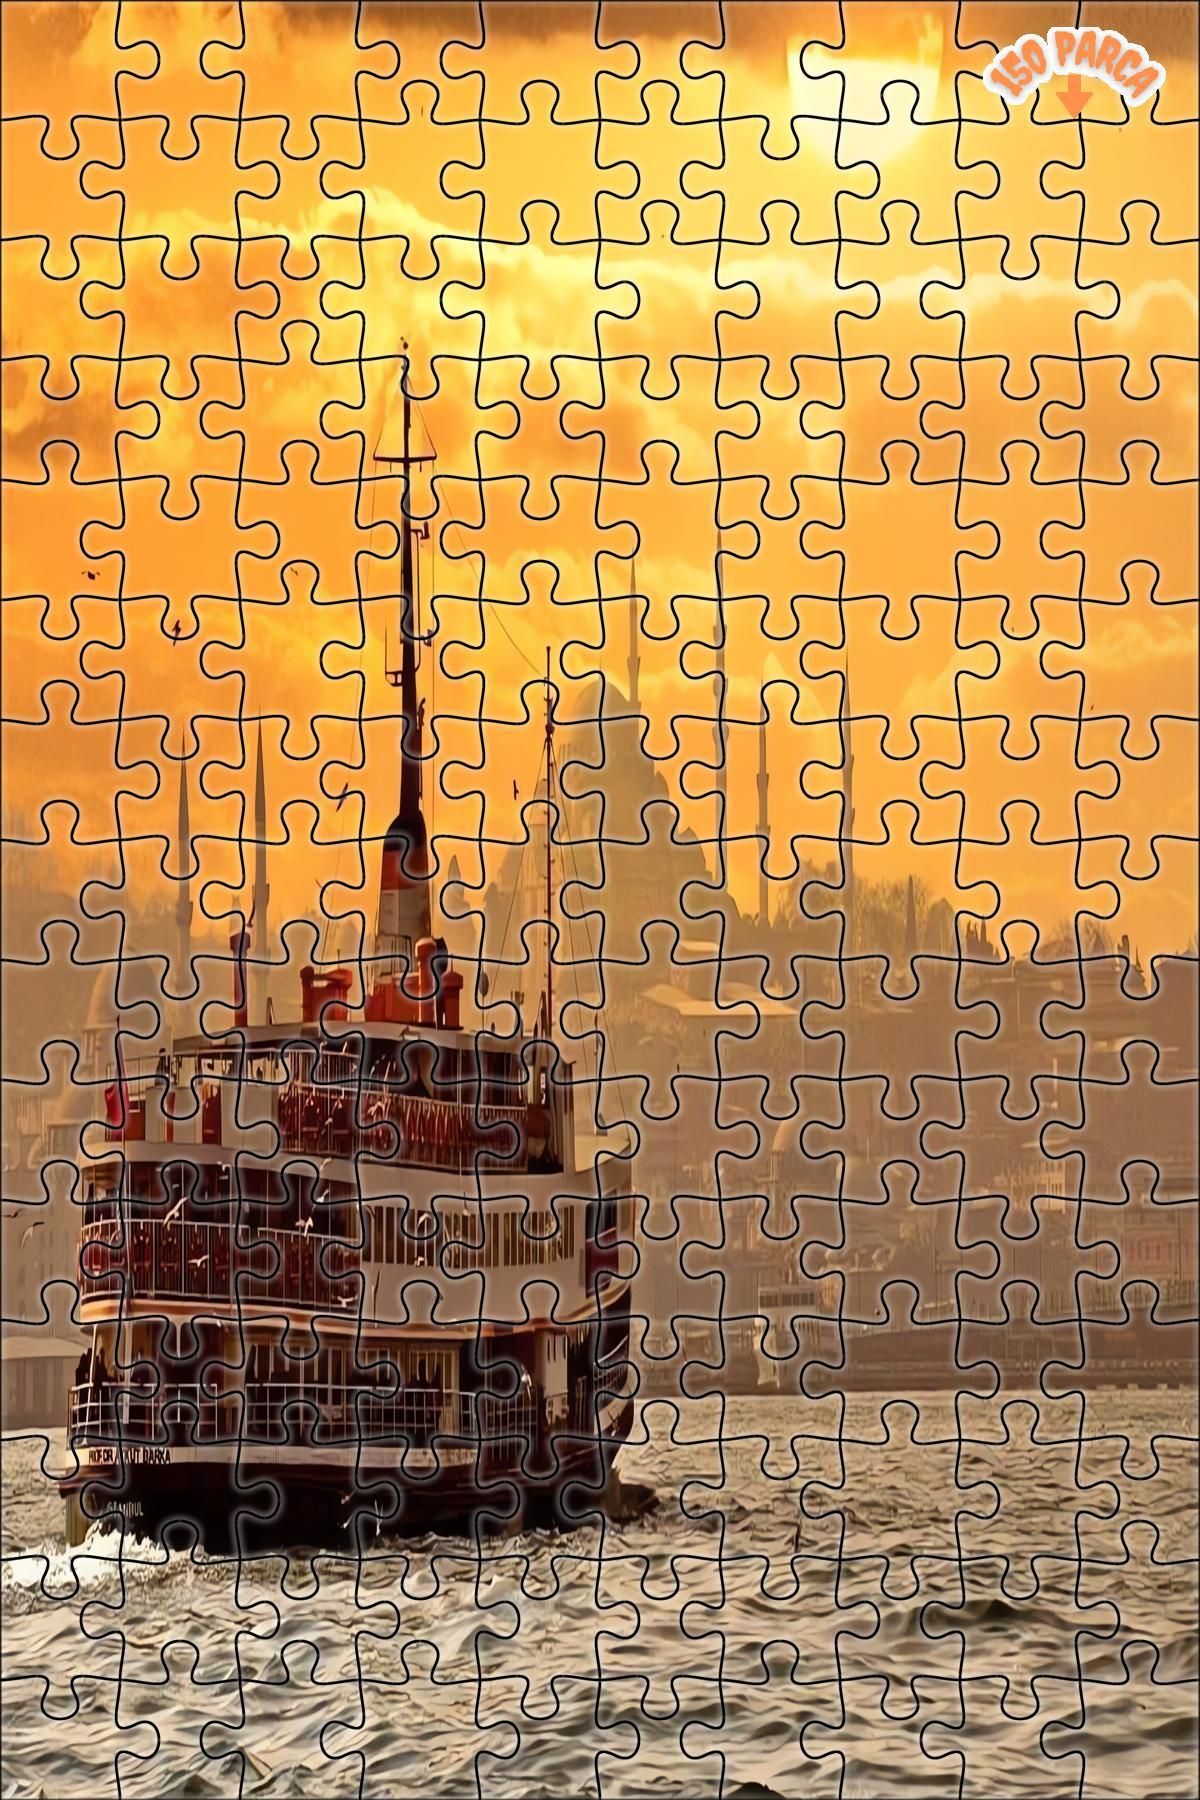 Teona Ahşap İstanbul Manzara Dekoratif Çift Katlı Çerçeveli Asılabilir Ahşap Puzzle 150 PARÇA 20X30